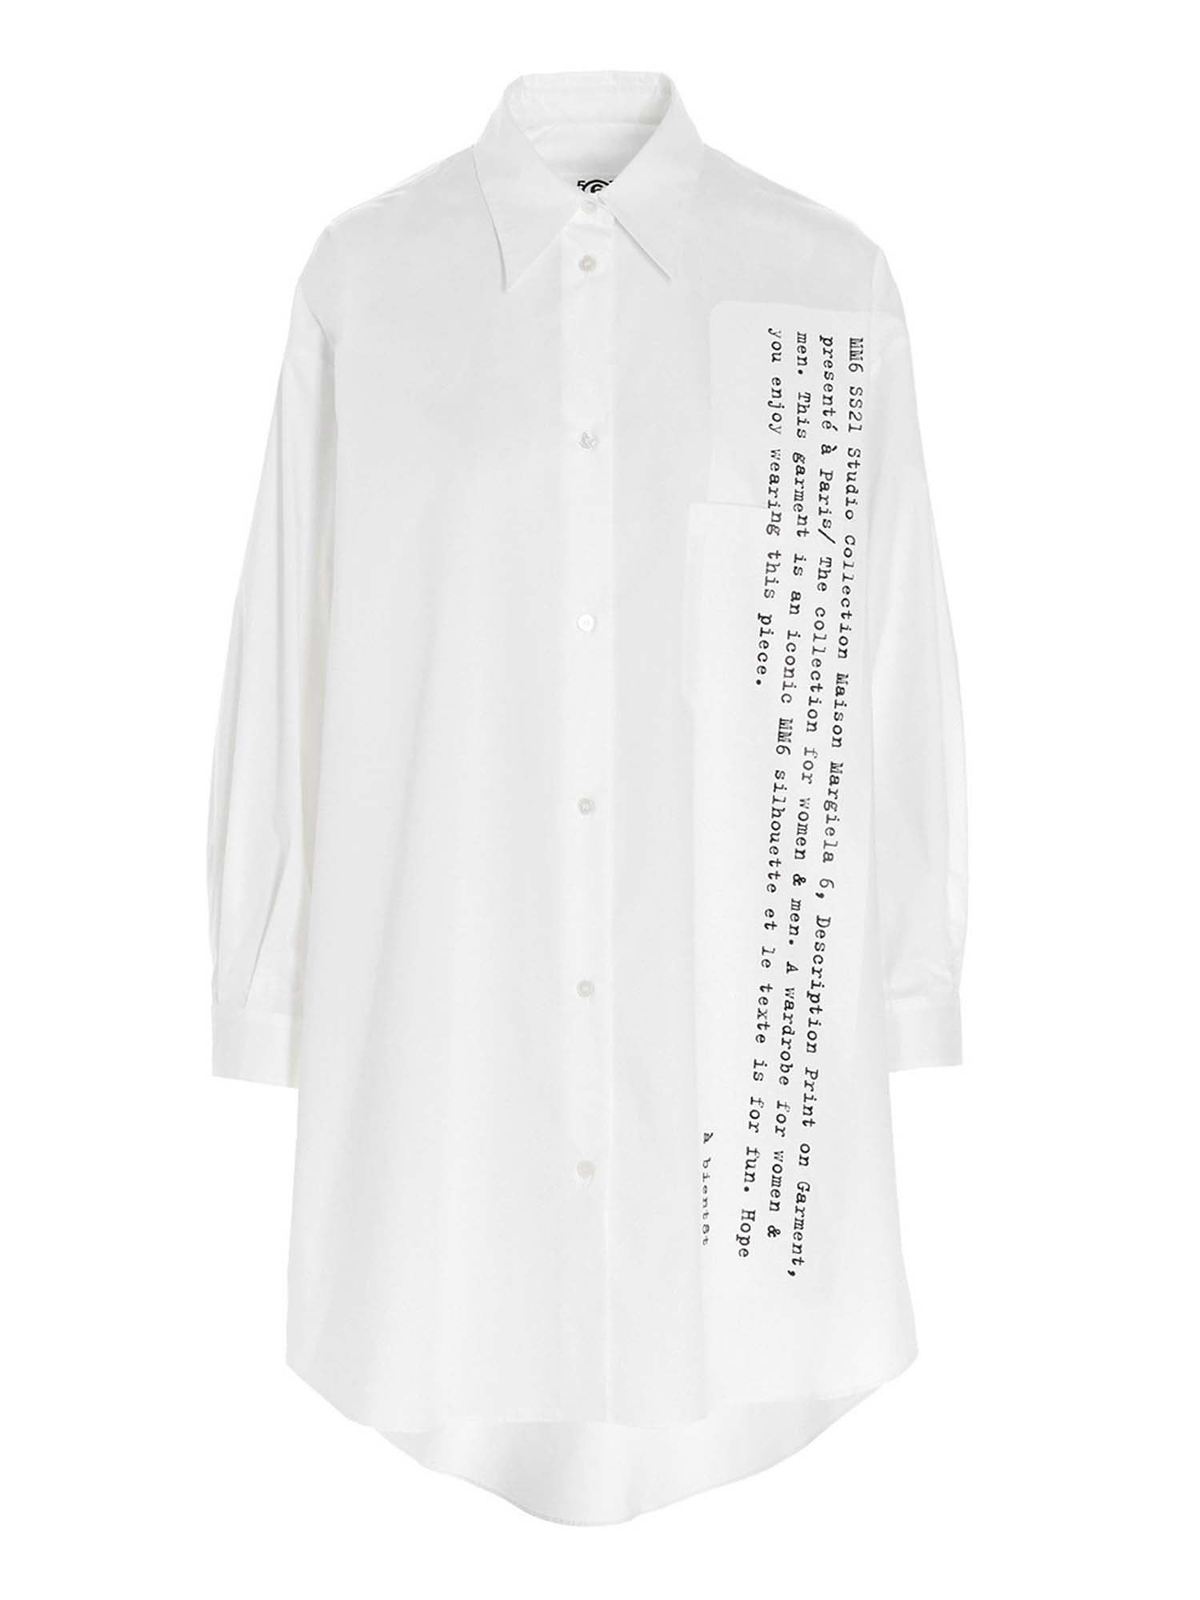 Mm6 Maison Margiela Oversize Printed Shirt In White